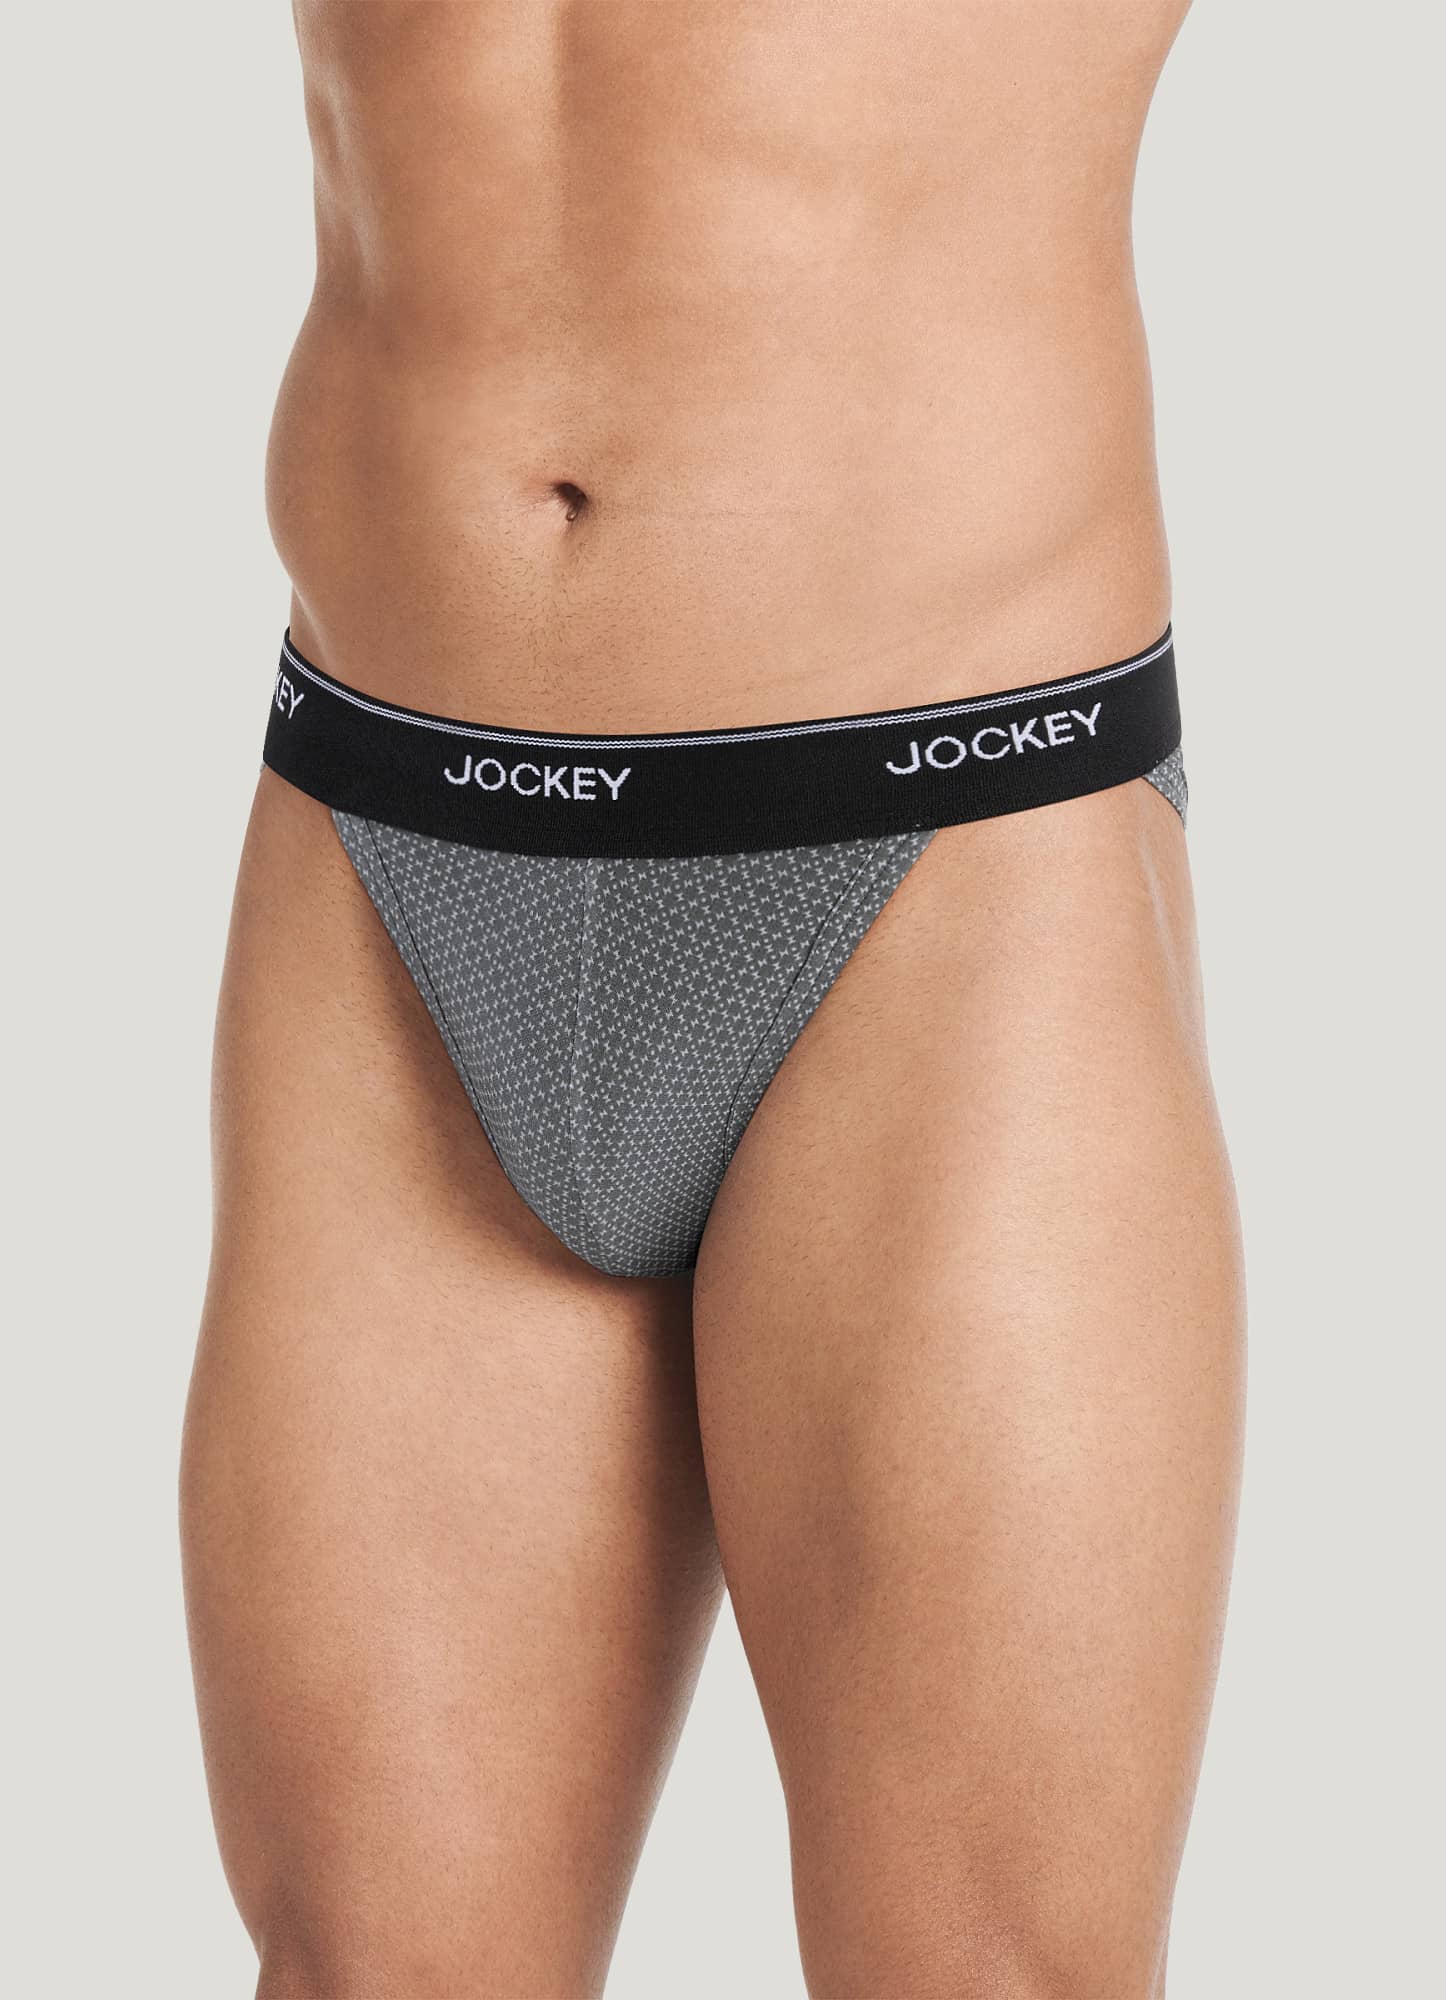 Jockey Men's Elance String Bikini - 2 Pack